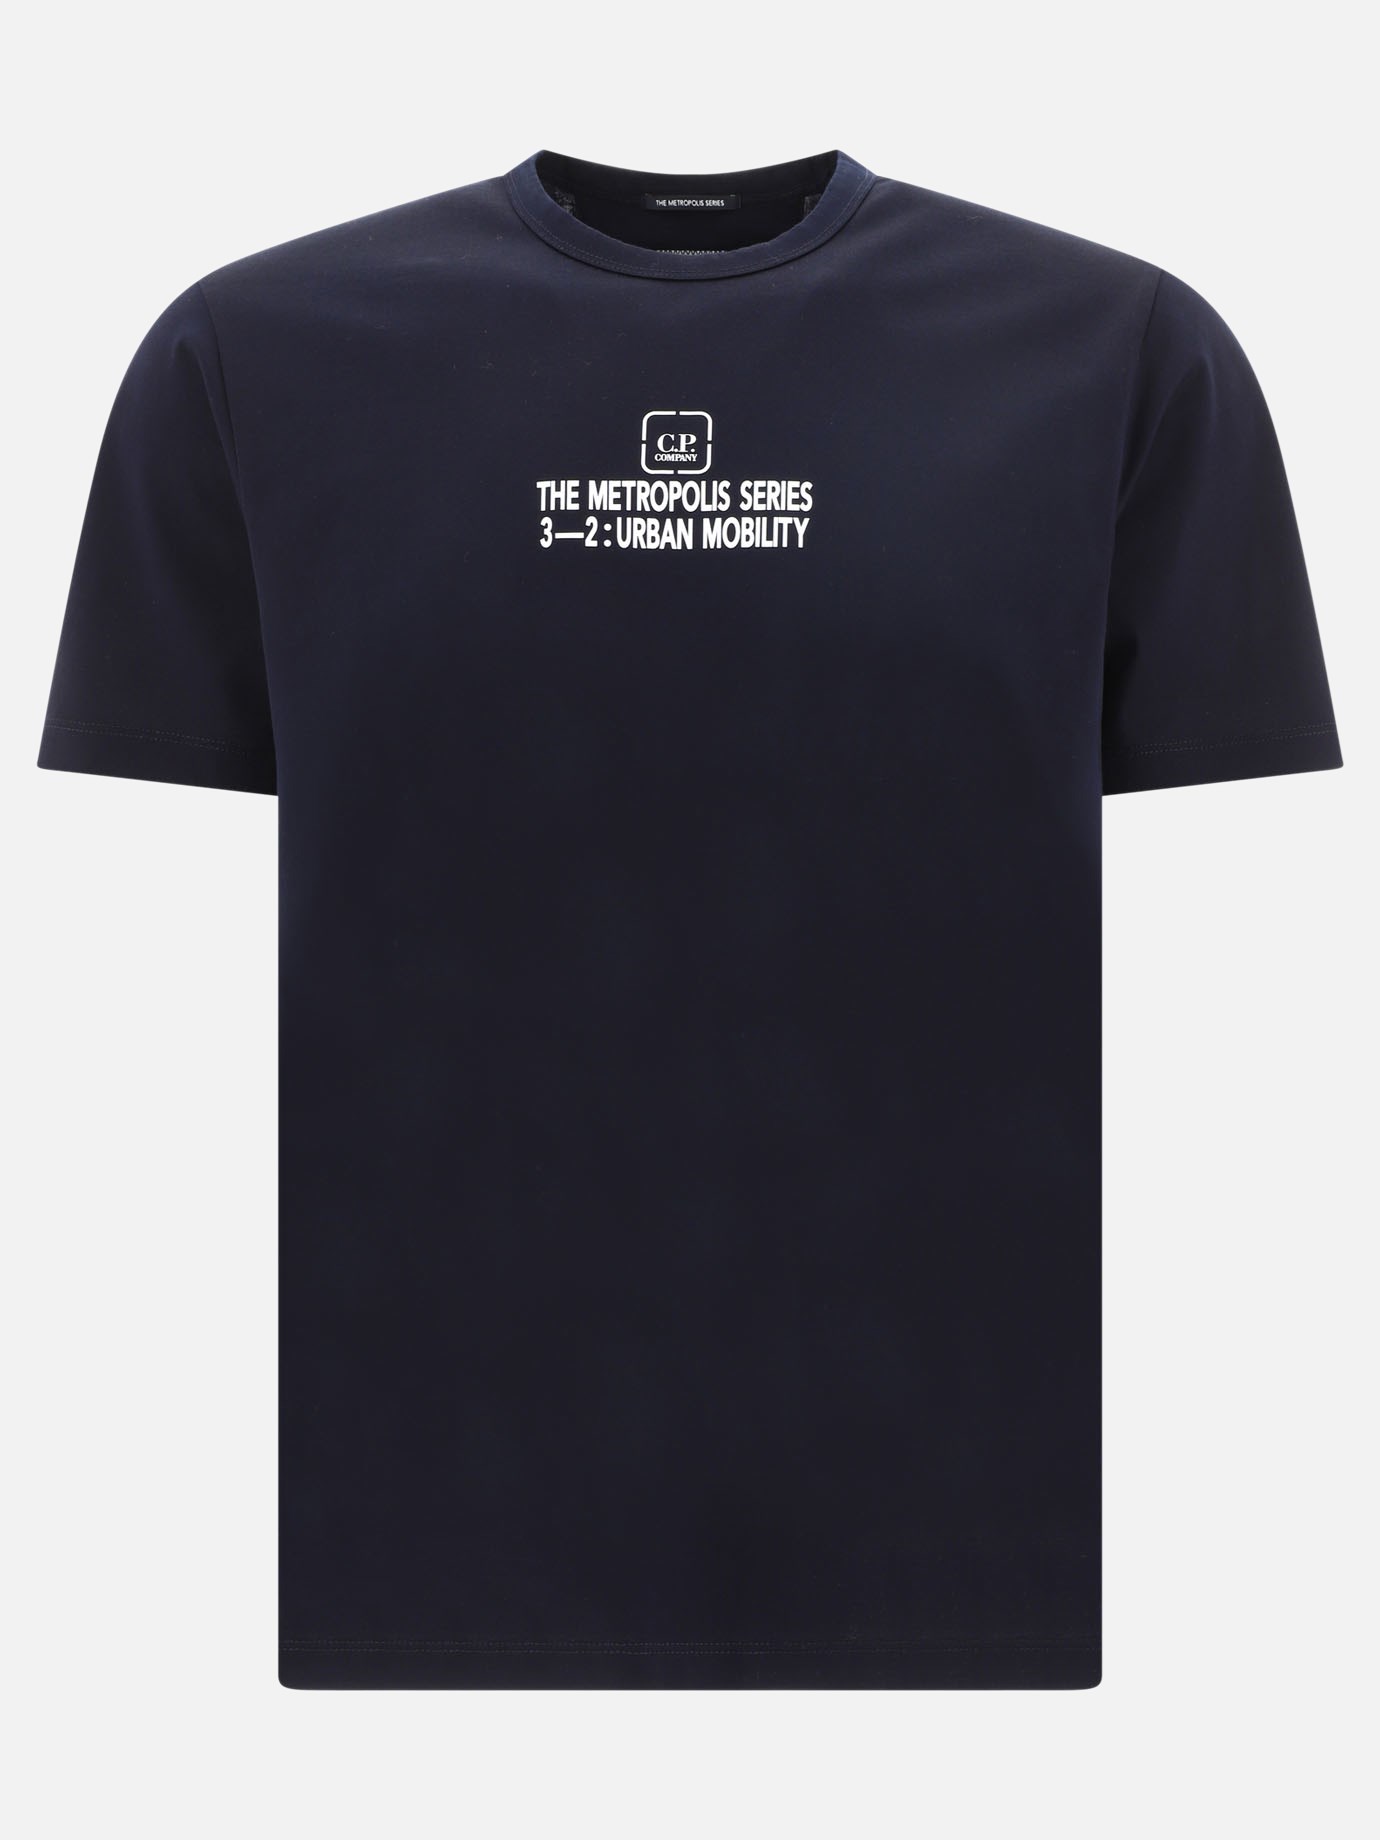 T-shirt  Metropolis Series by C.P. Company - 1